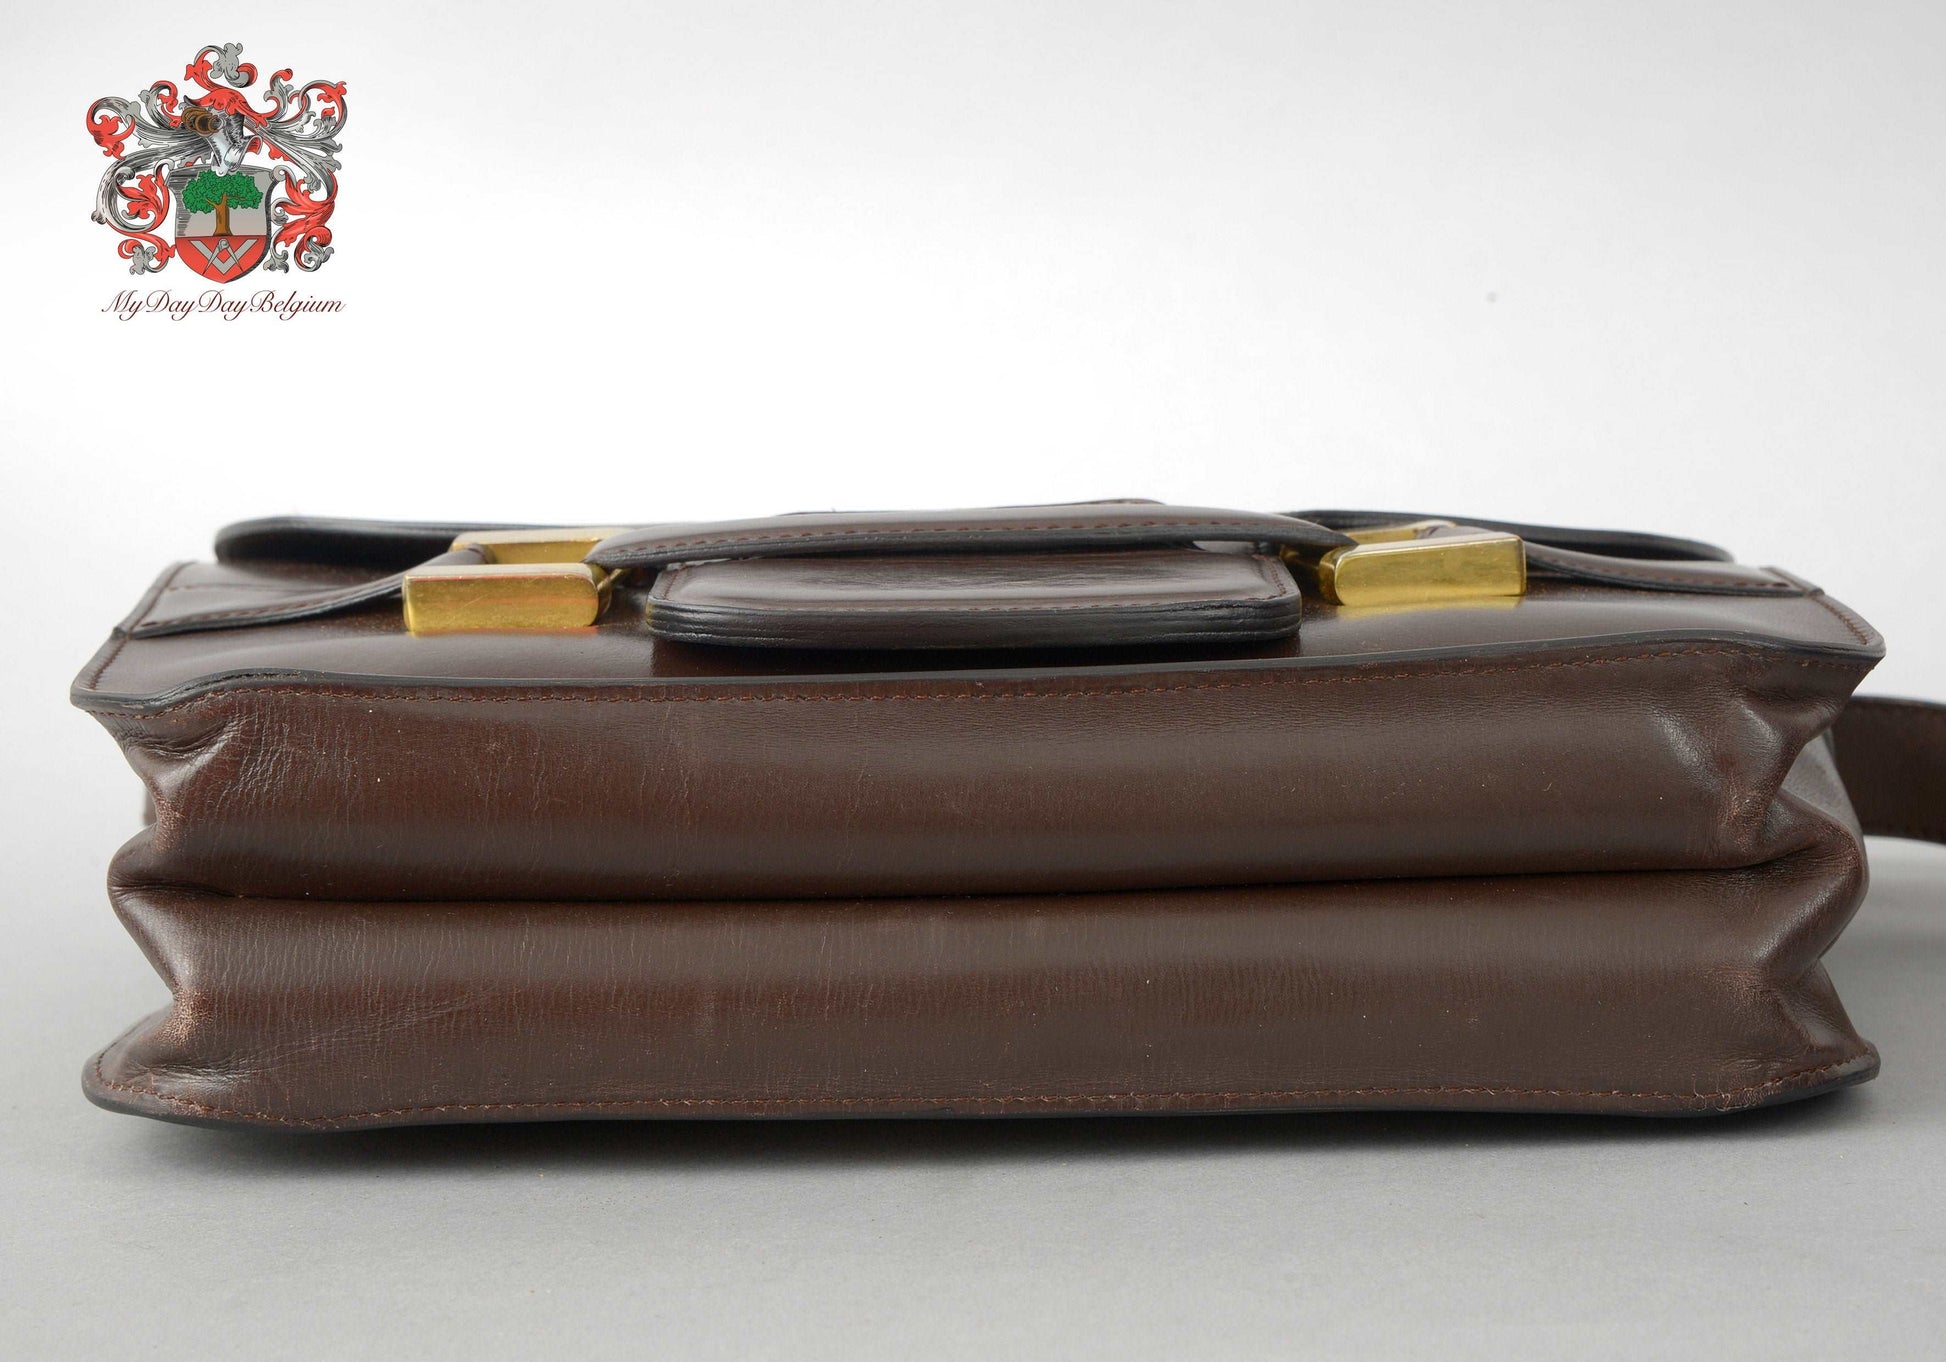 Delvaux Soft Leather Depose in Olive Crossbody Belt Bag